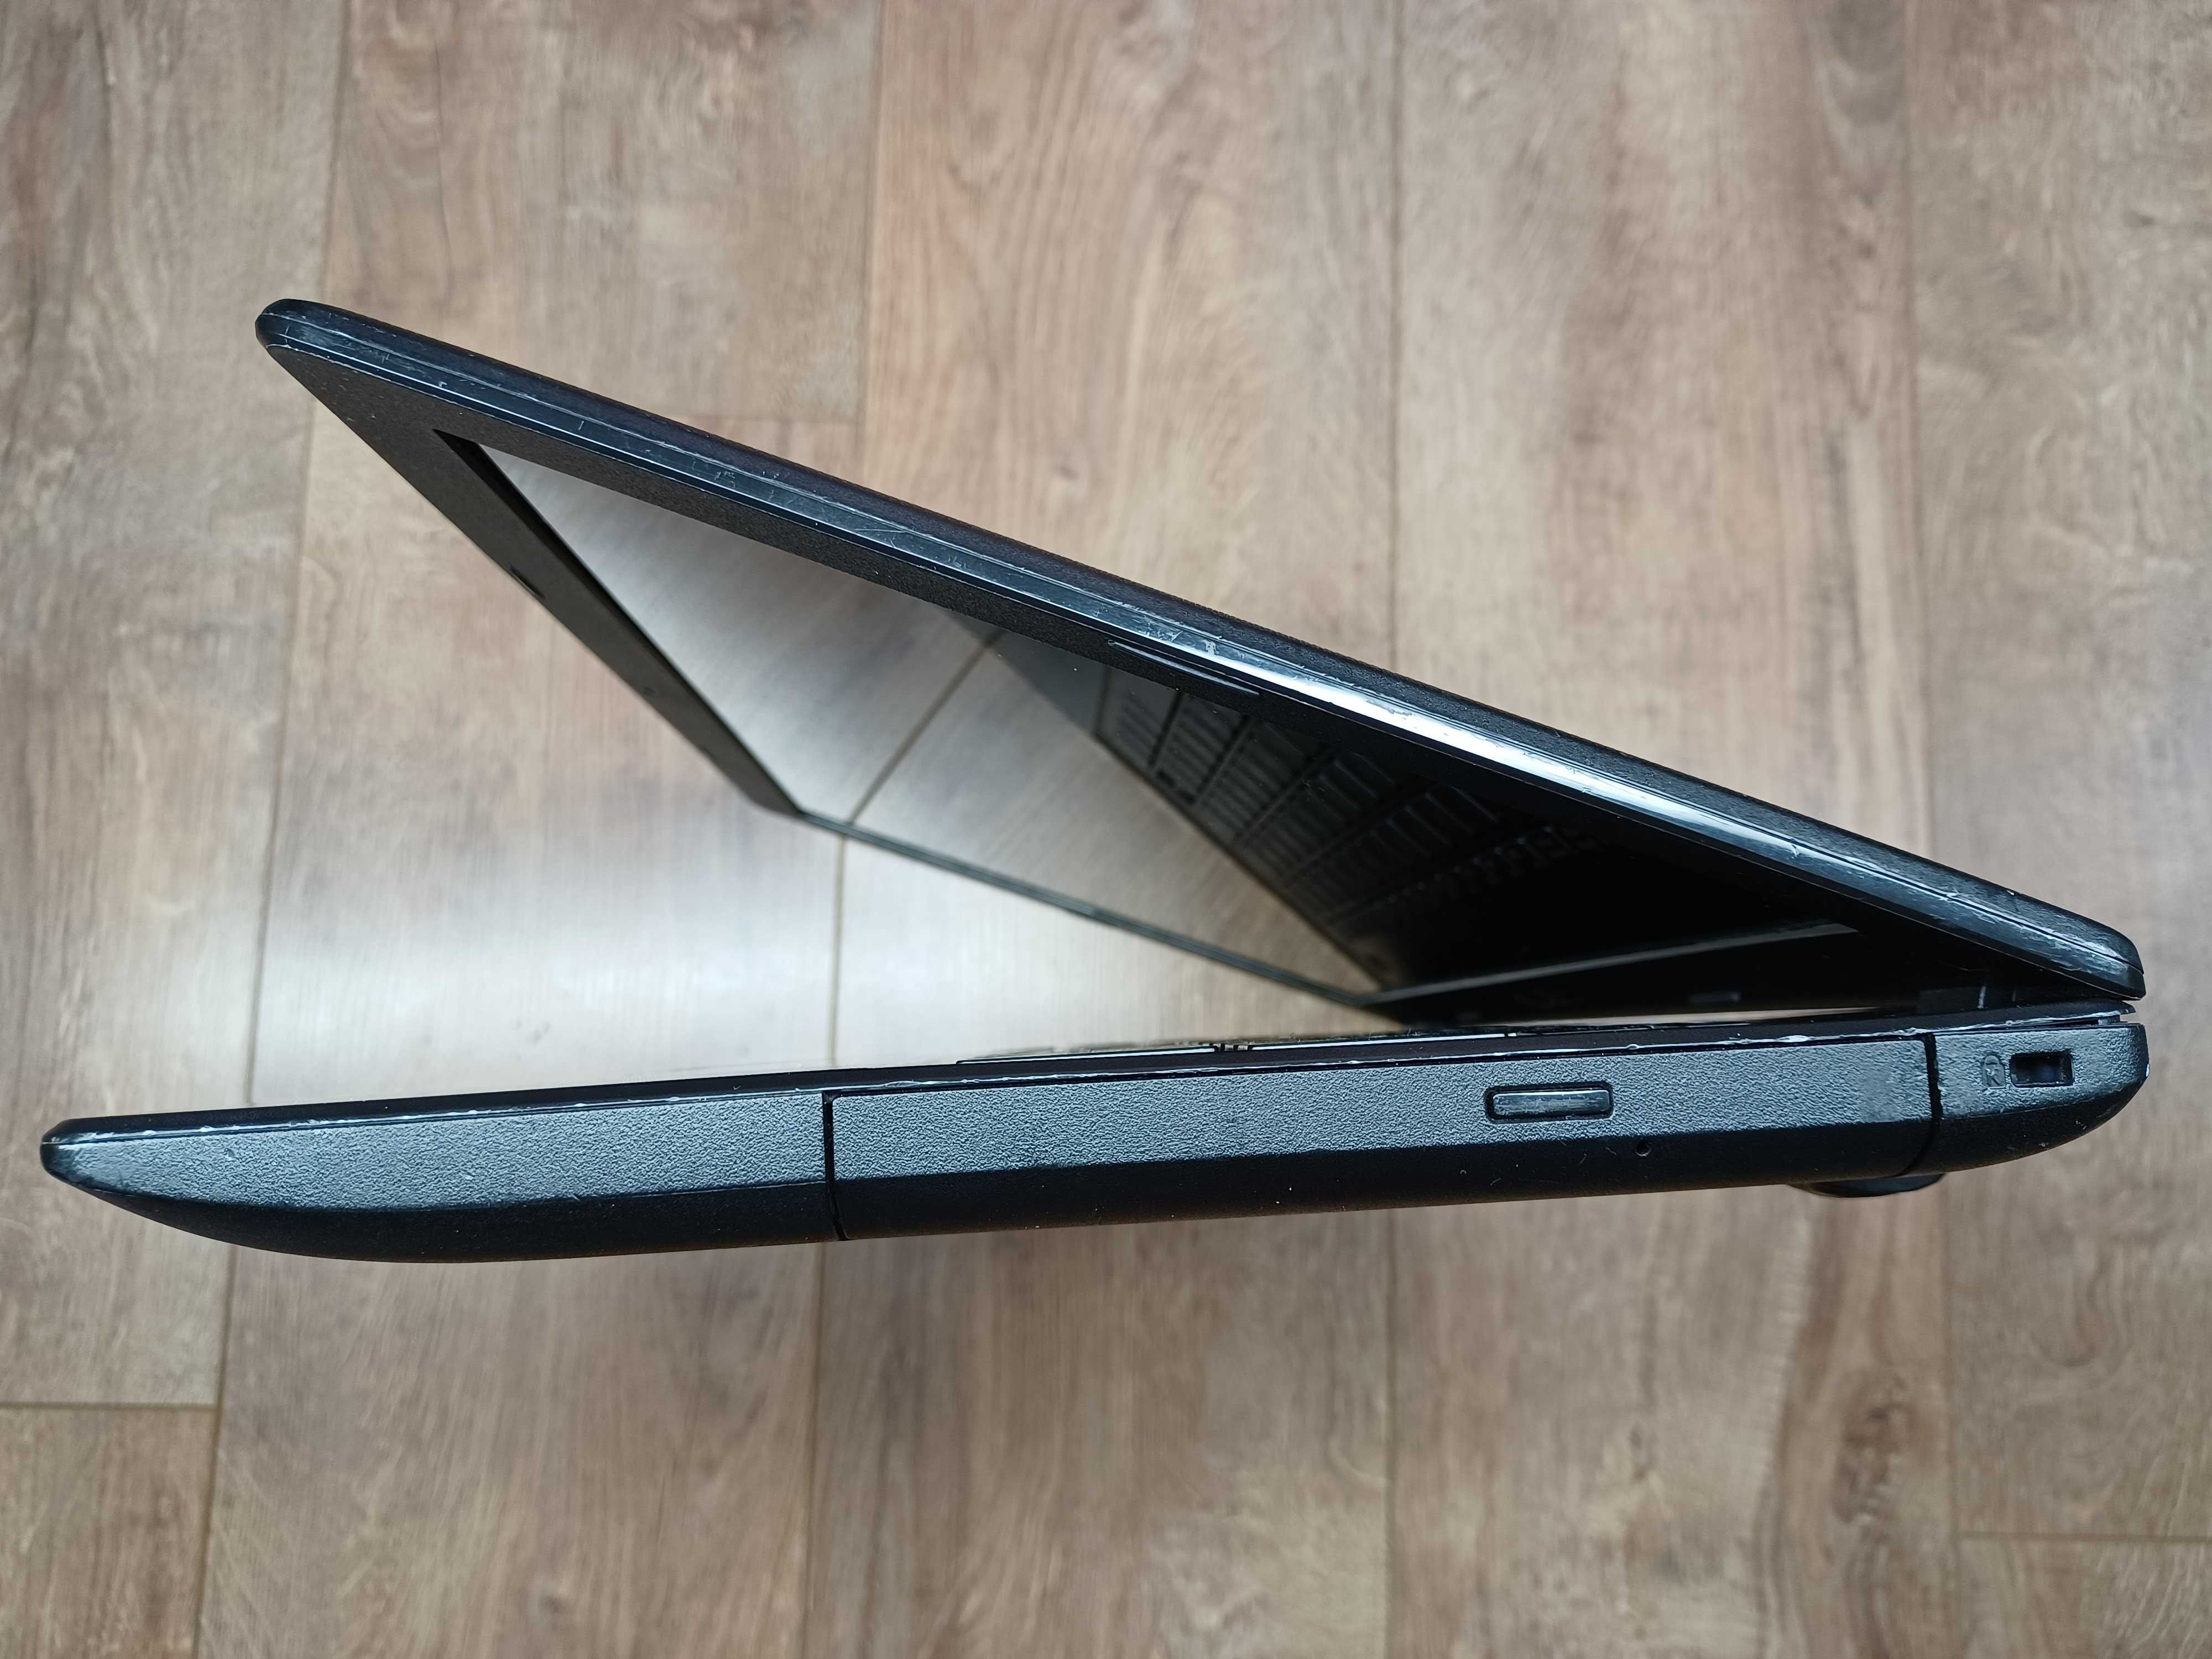 Ноутбук Asus X551m